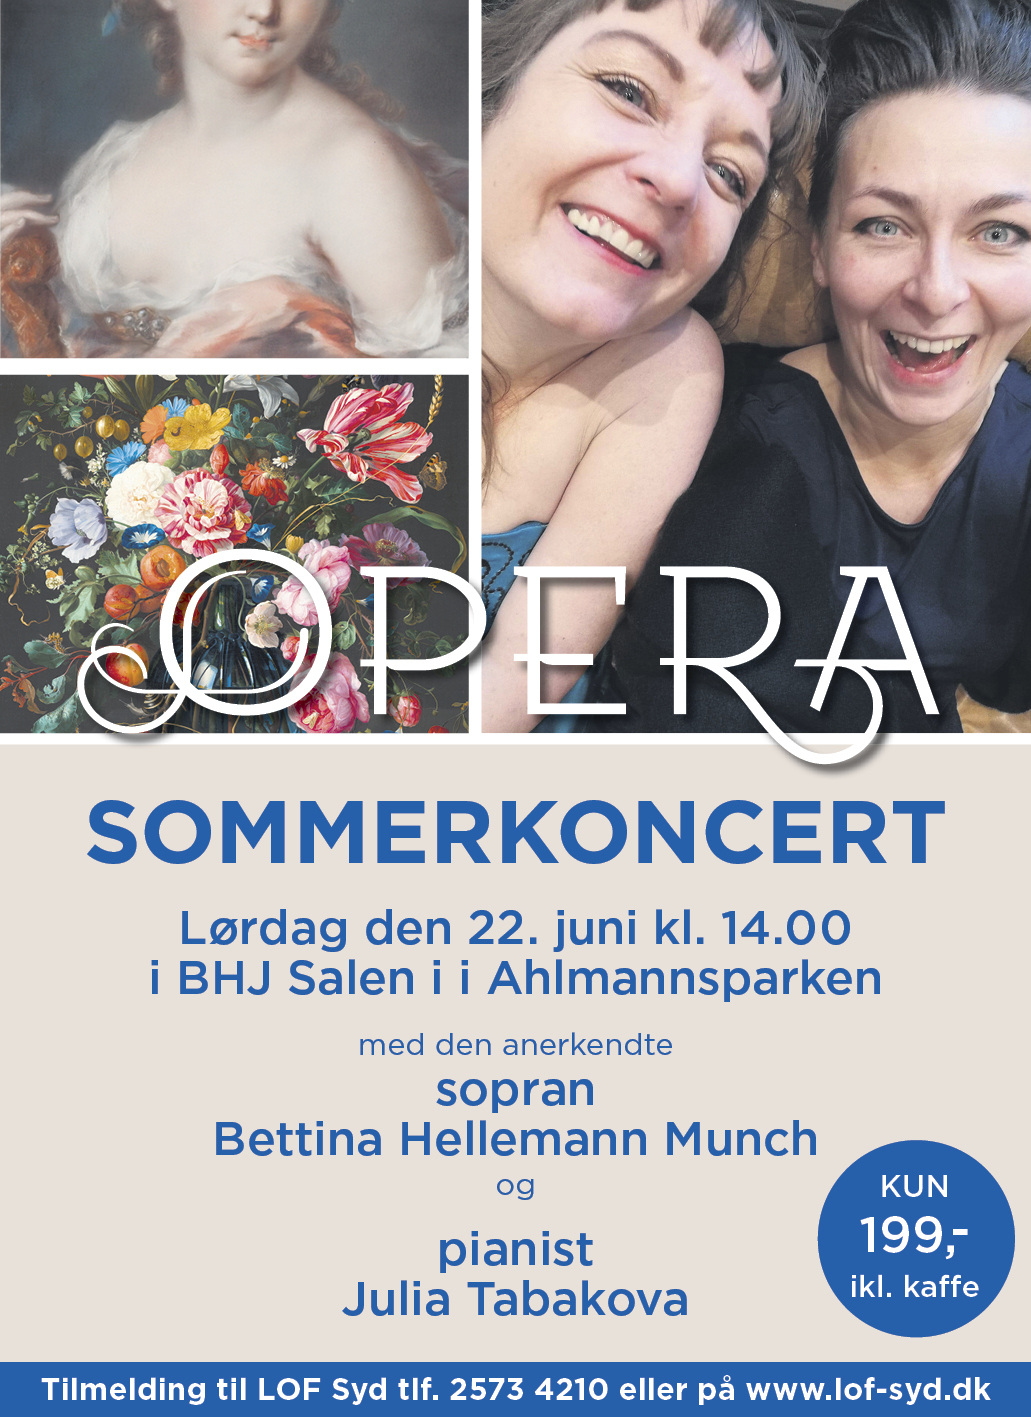 Sommerkoncert Lørdag den 22. juni kl. 14.00 i BHJ Salen i i Ahlmannsparken med den anerkendte sopran Bettina Hellemann Munch og pianist Julia Tabakova